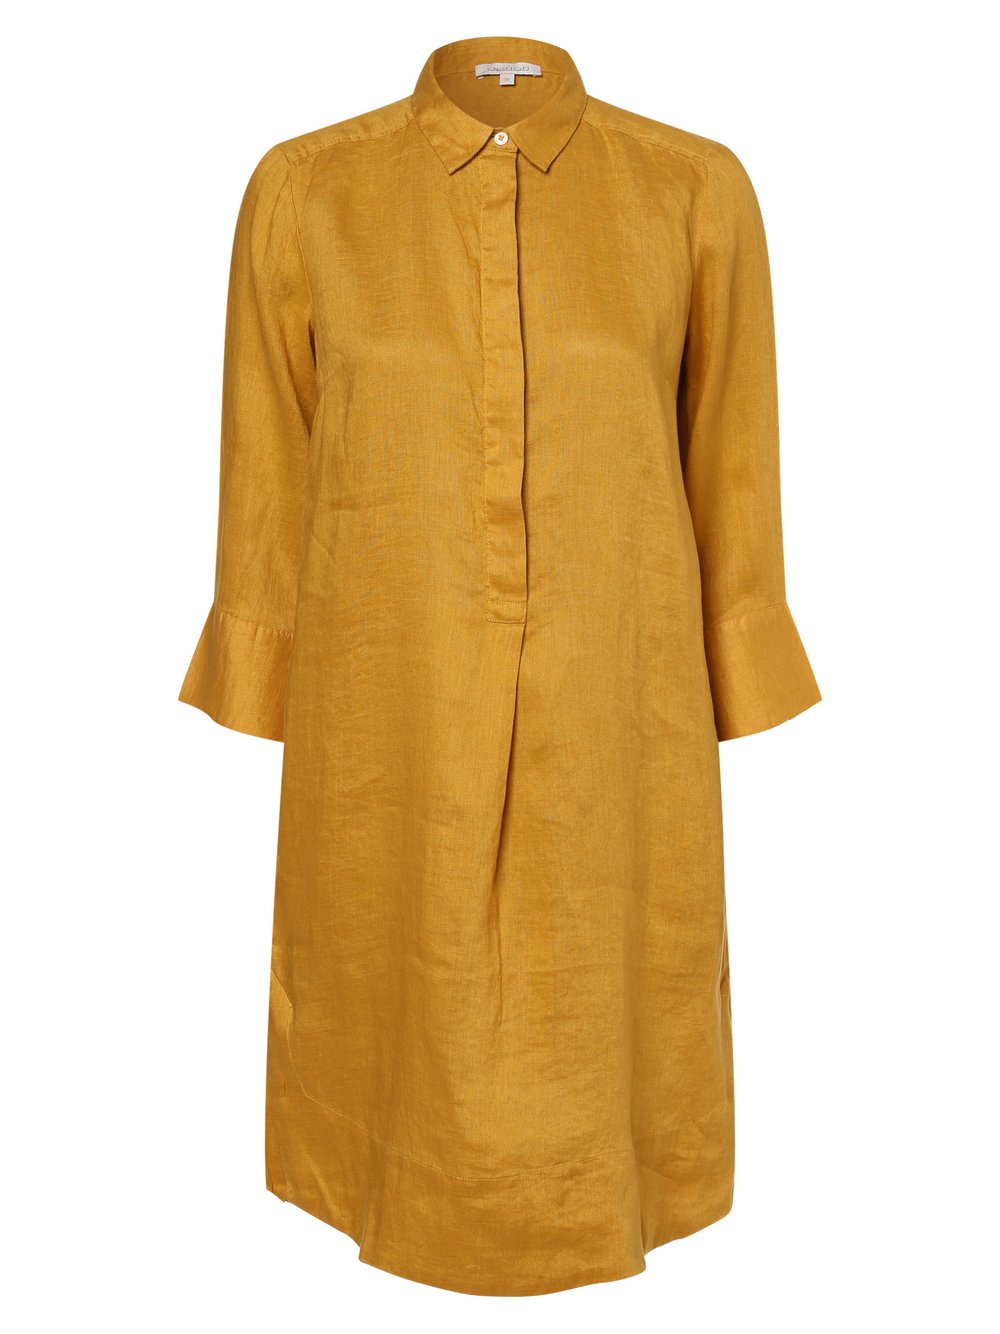 Apriori - Damska sukienka lniana, żółty